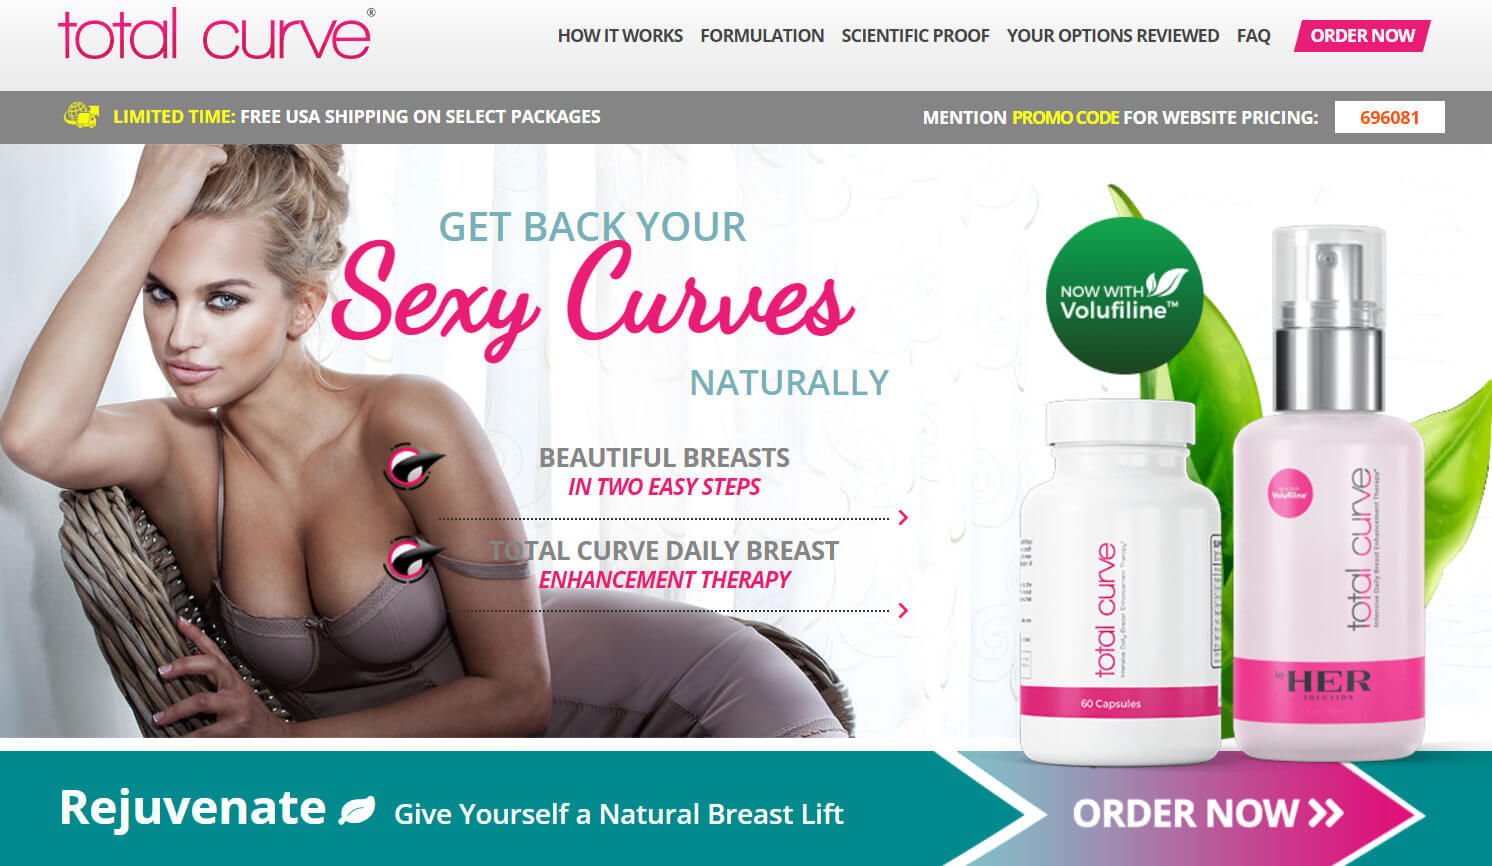 Total Curve Official Website Screenshot